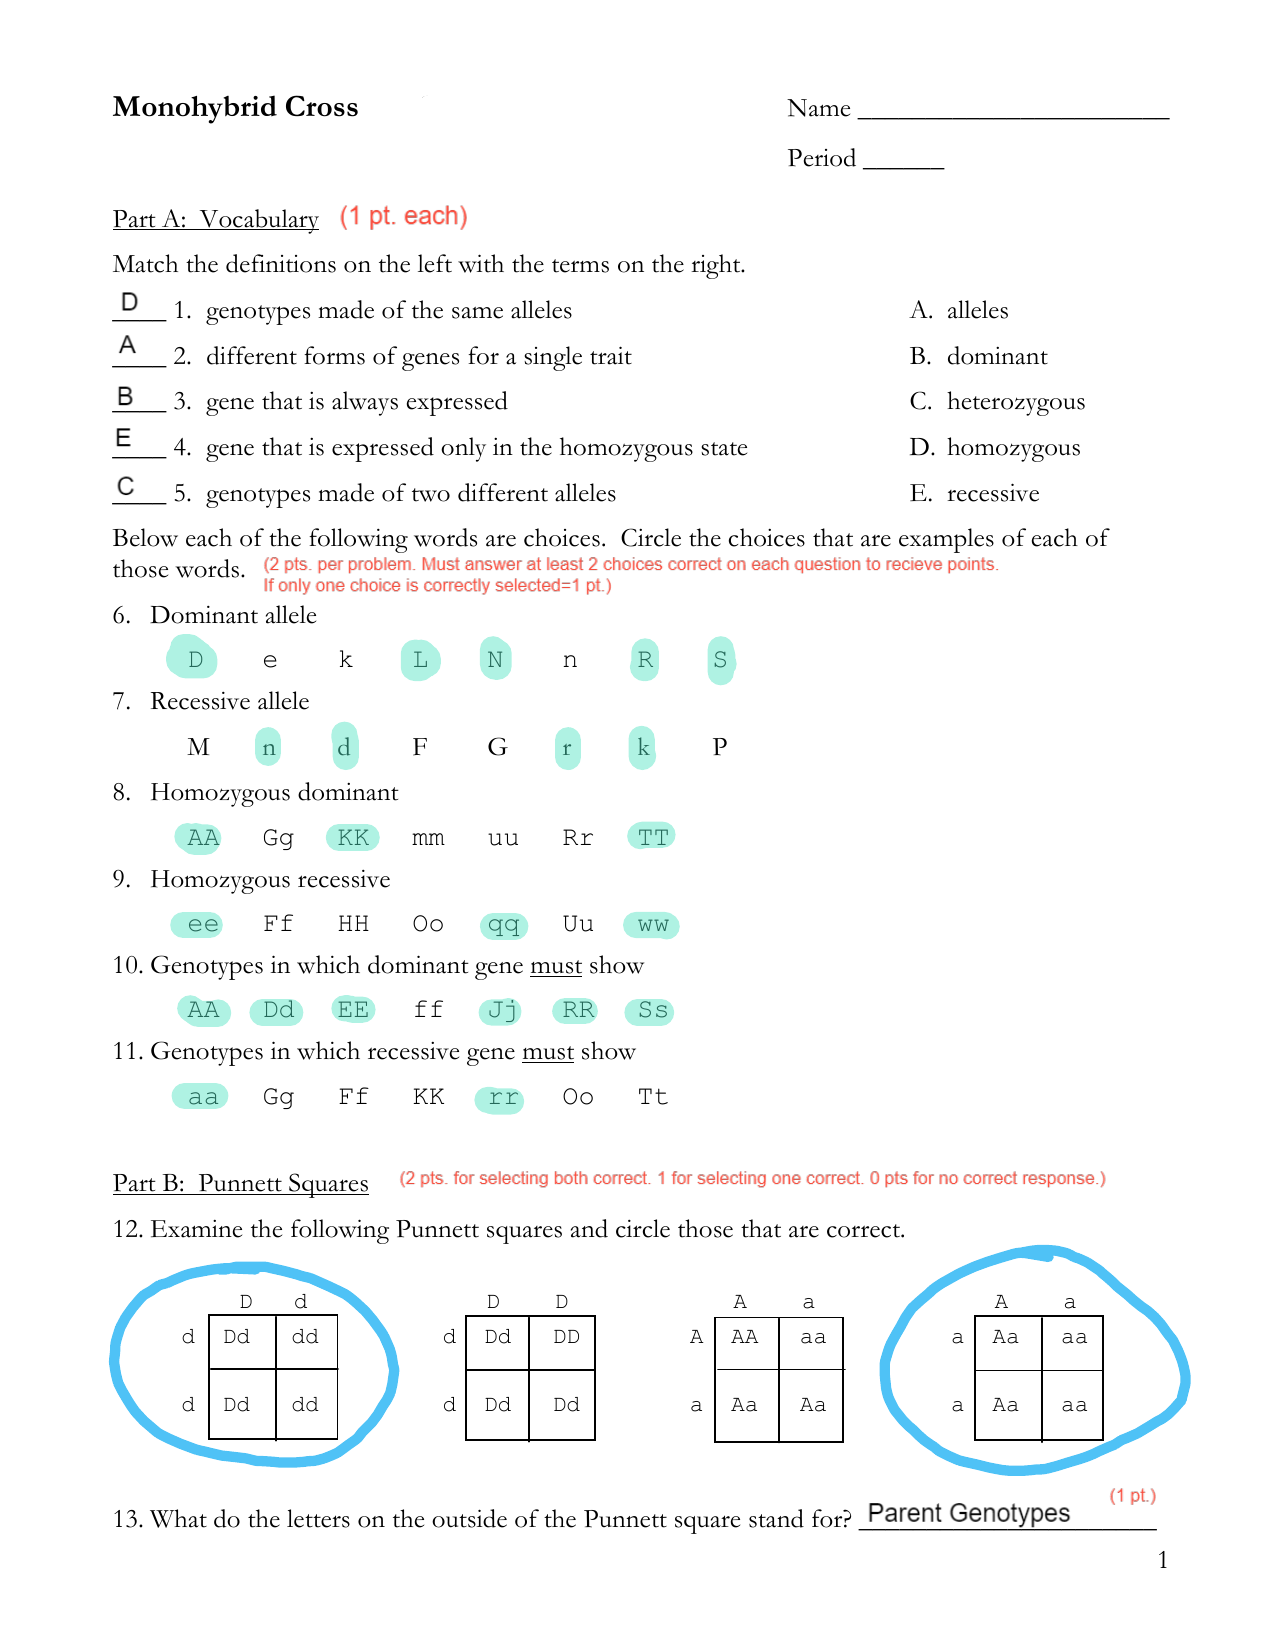 Monohybrid Cross Activity Sheet (Key) Inside Monohybrid Cross Worksheet Answers